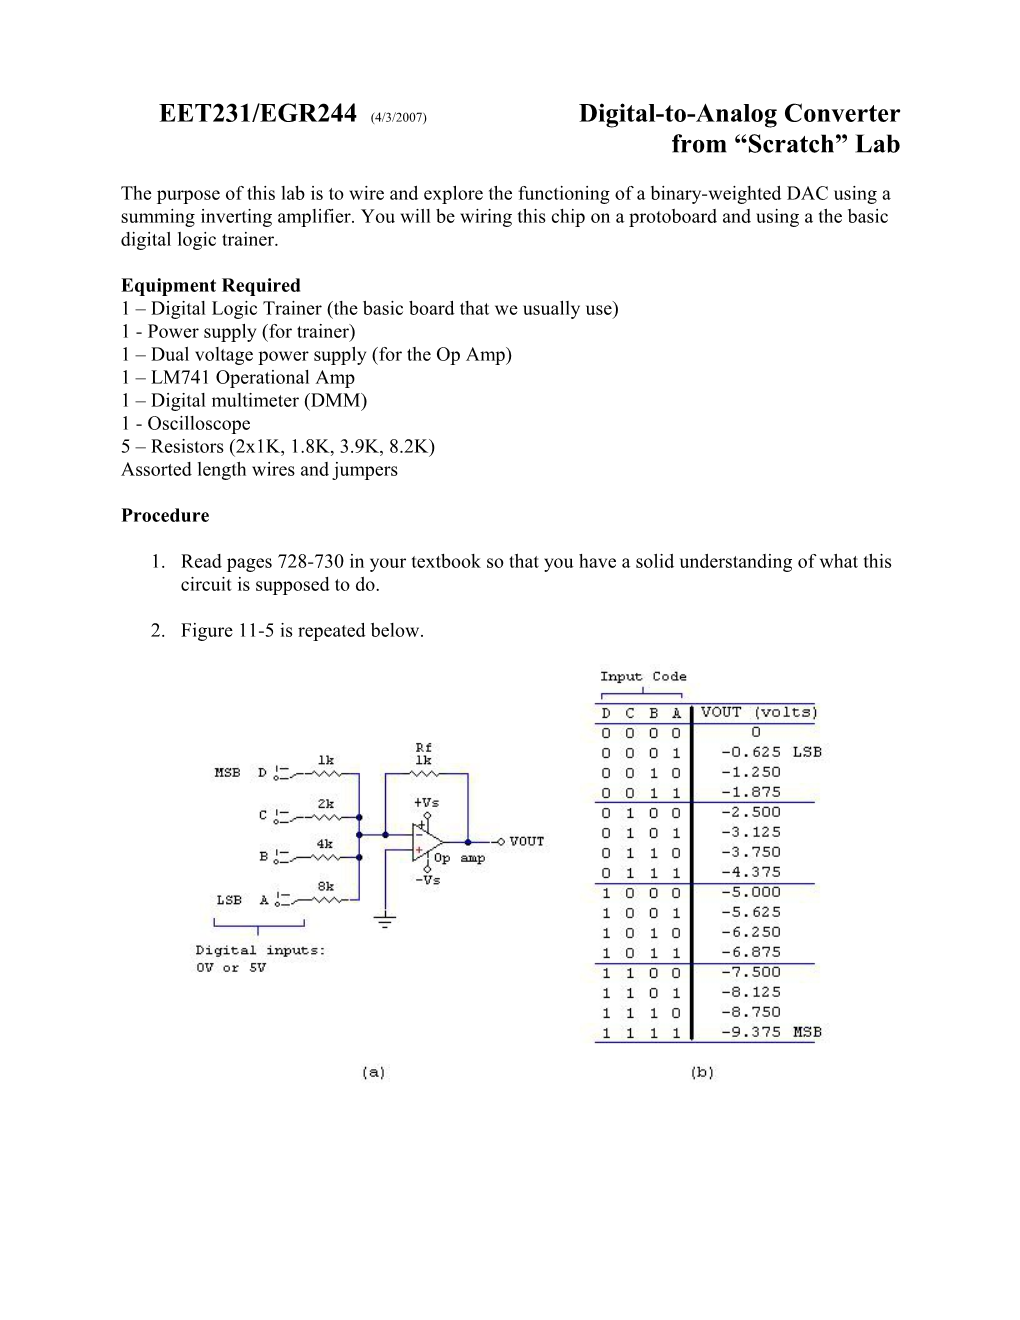 EET231/EGR244 (4/3/2007) Digital-To-Analog Converter from Scratch Lab